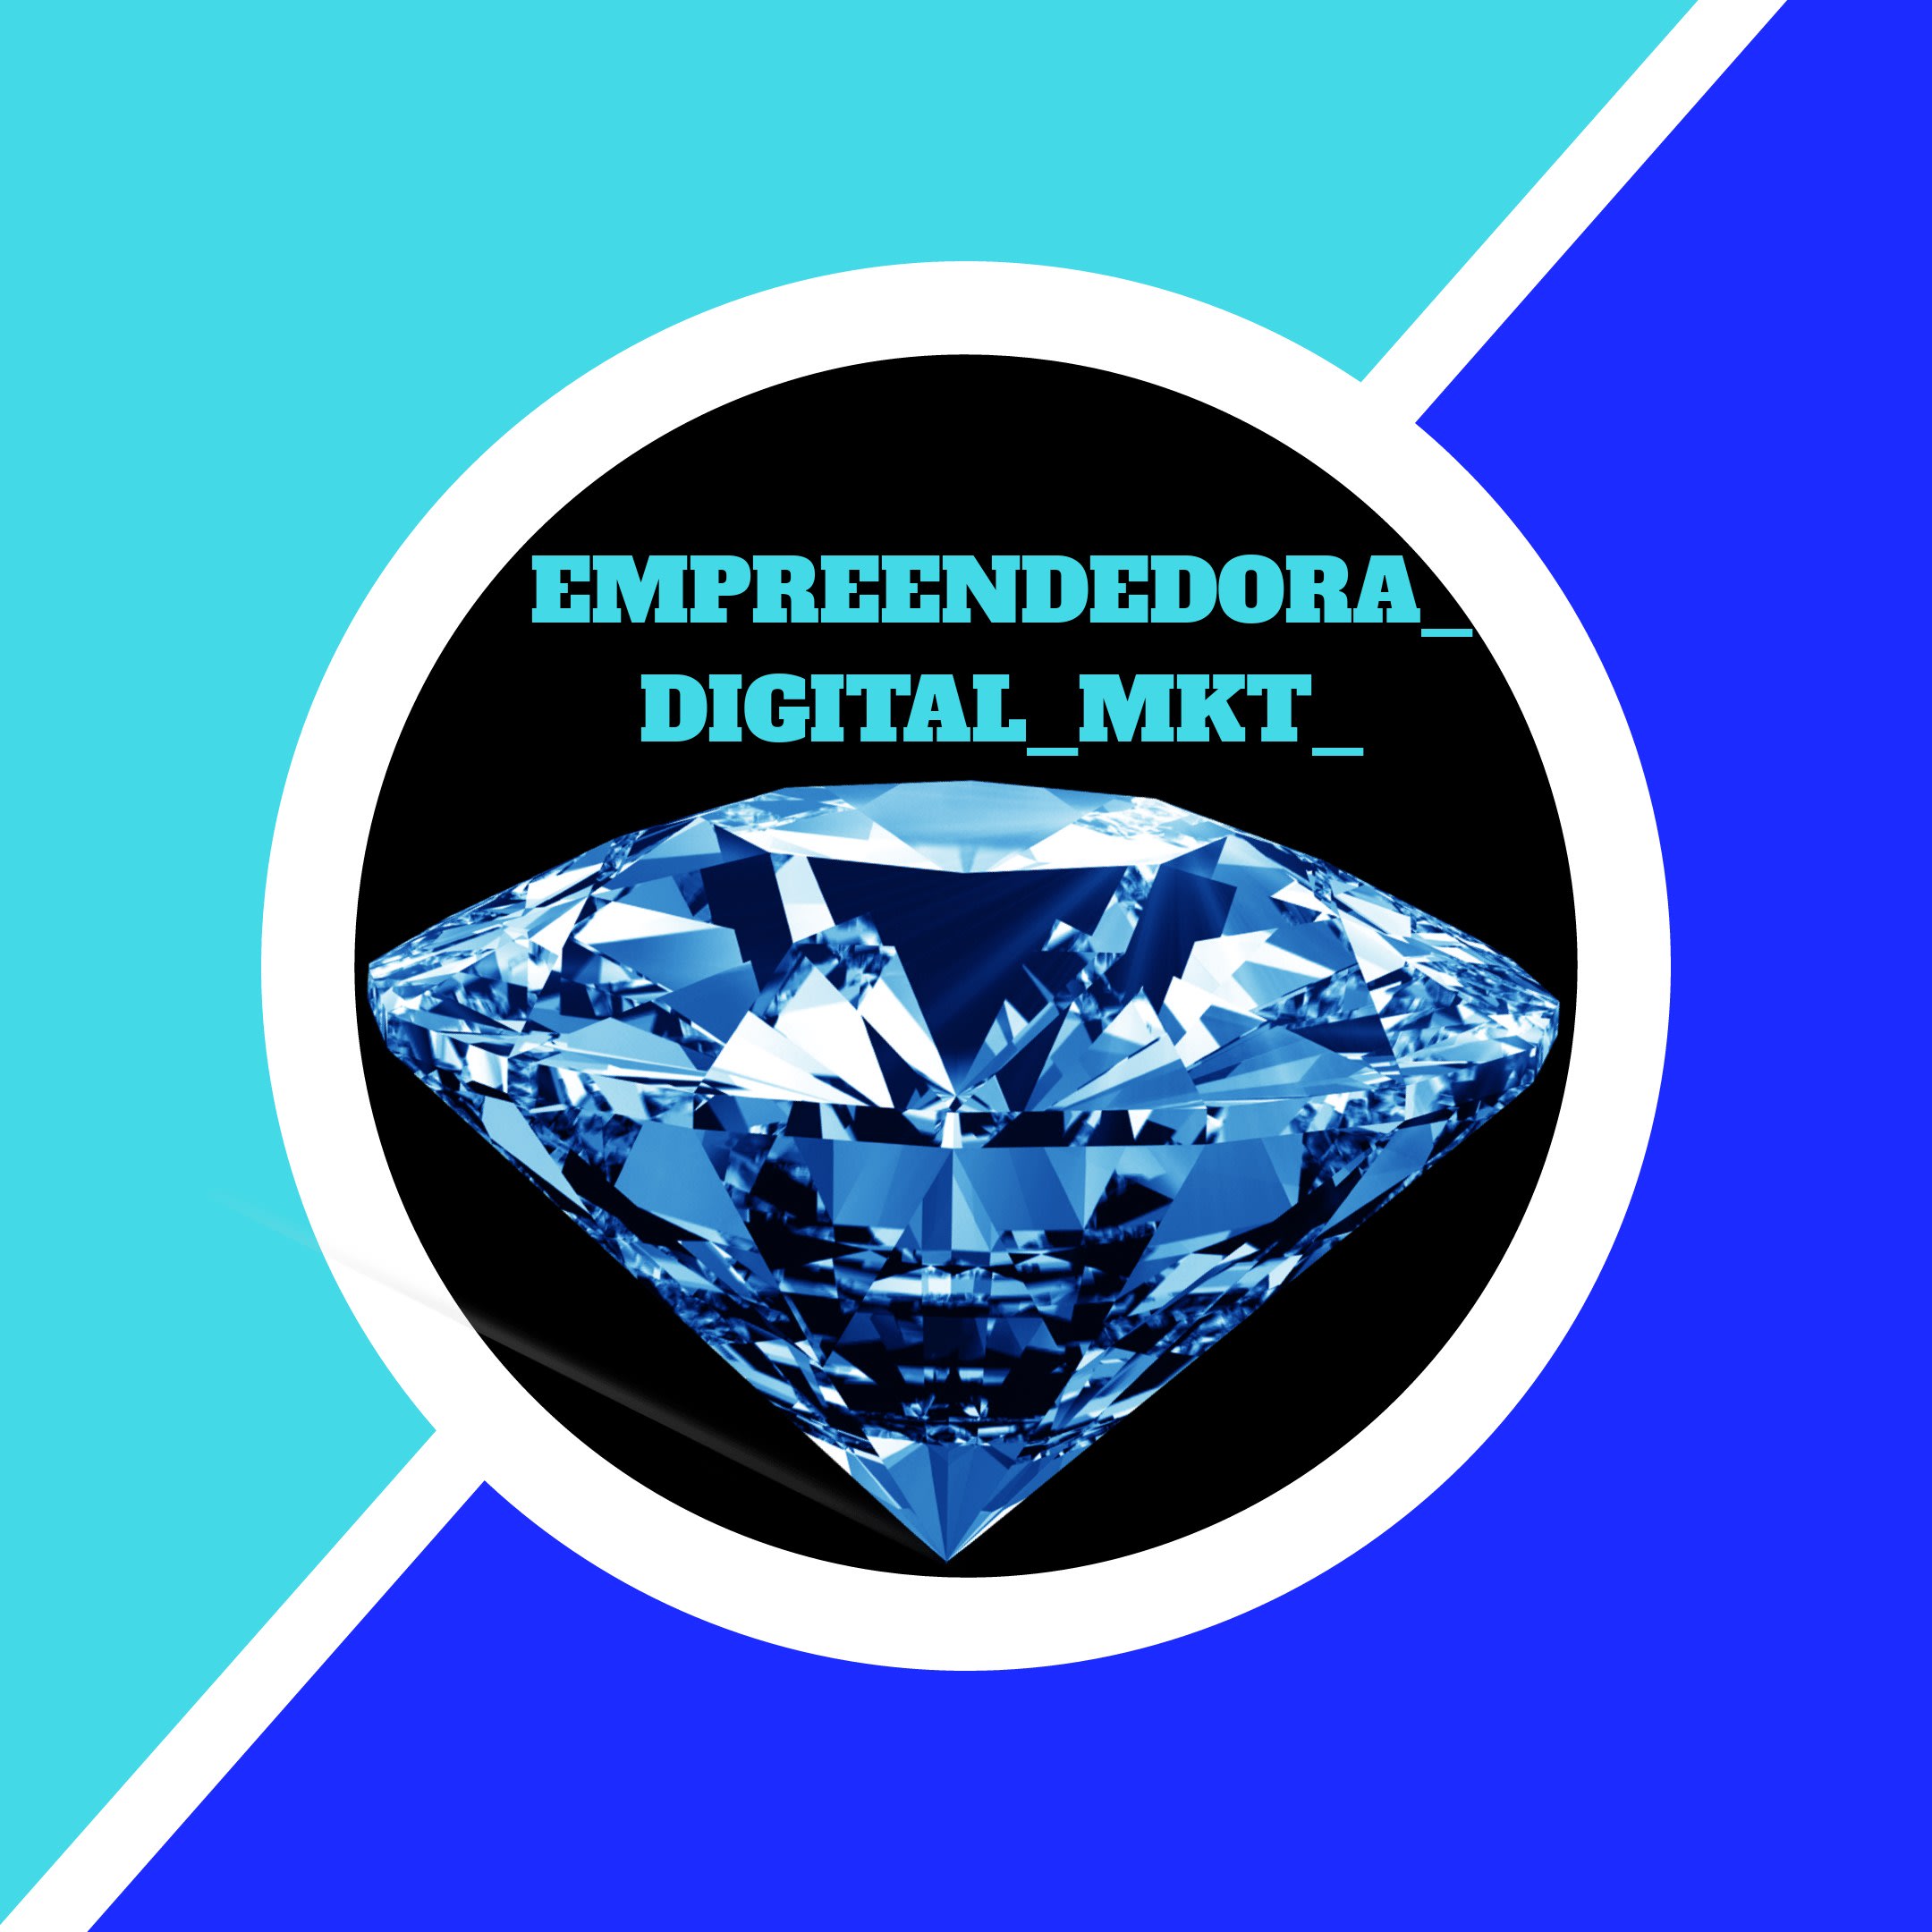 Empreendedora Digital Mkt